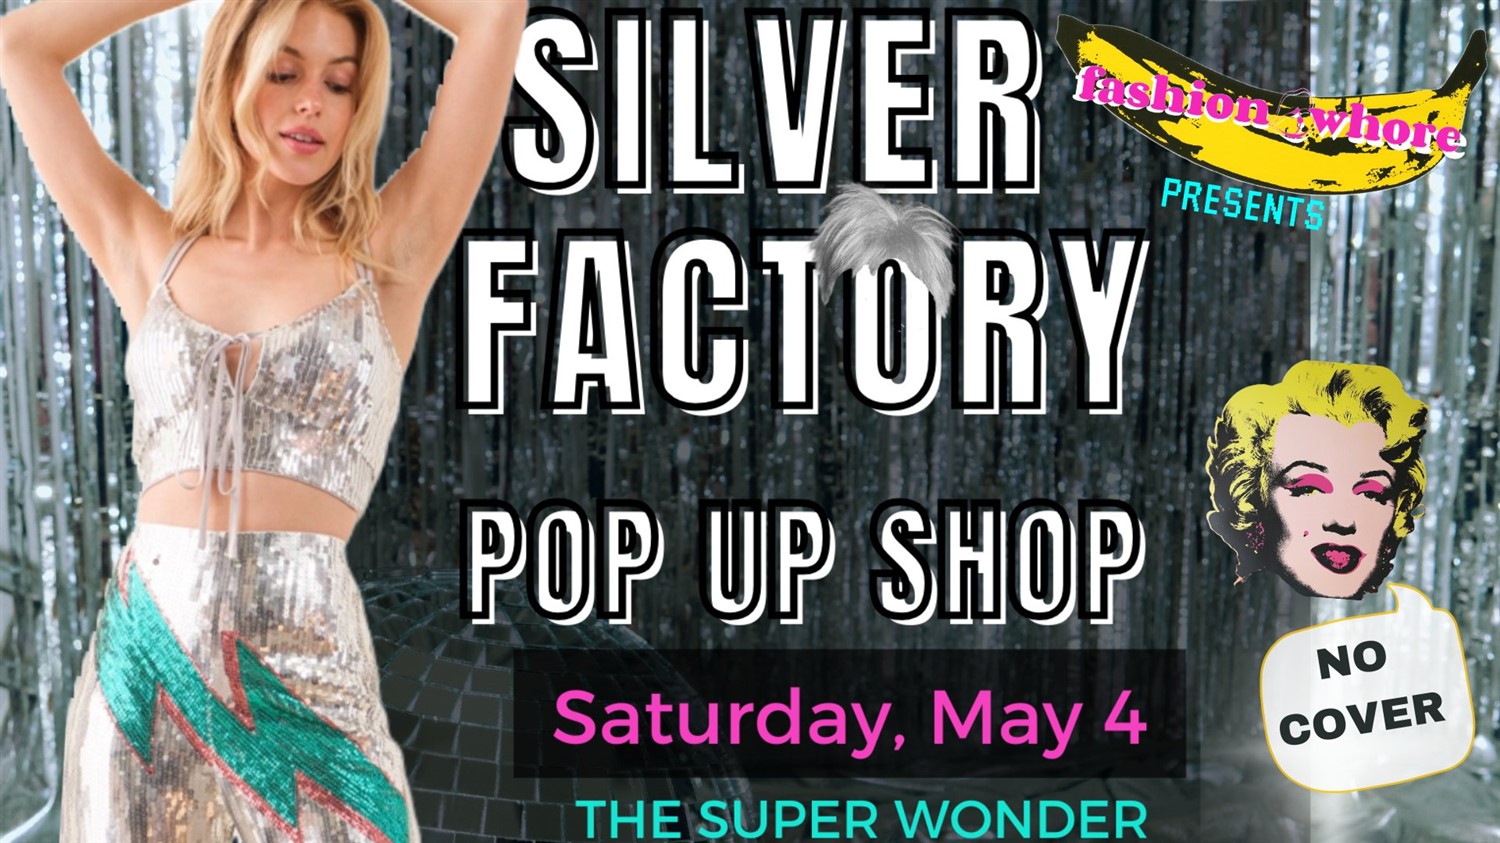 SILVER FACTORY Pop Up & DJ on mai 04, 18:00@SUPER WONDER GALLERY - Achetez des billets et obtenez des informations surSuper Wonder Gallery 